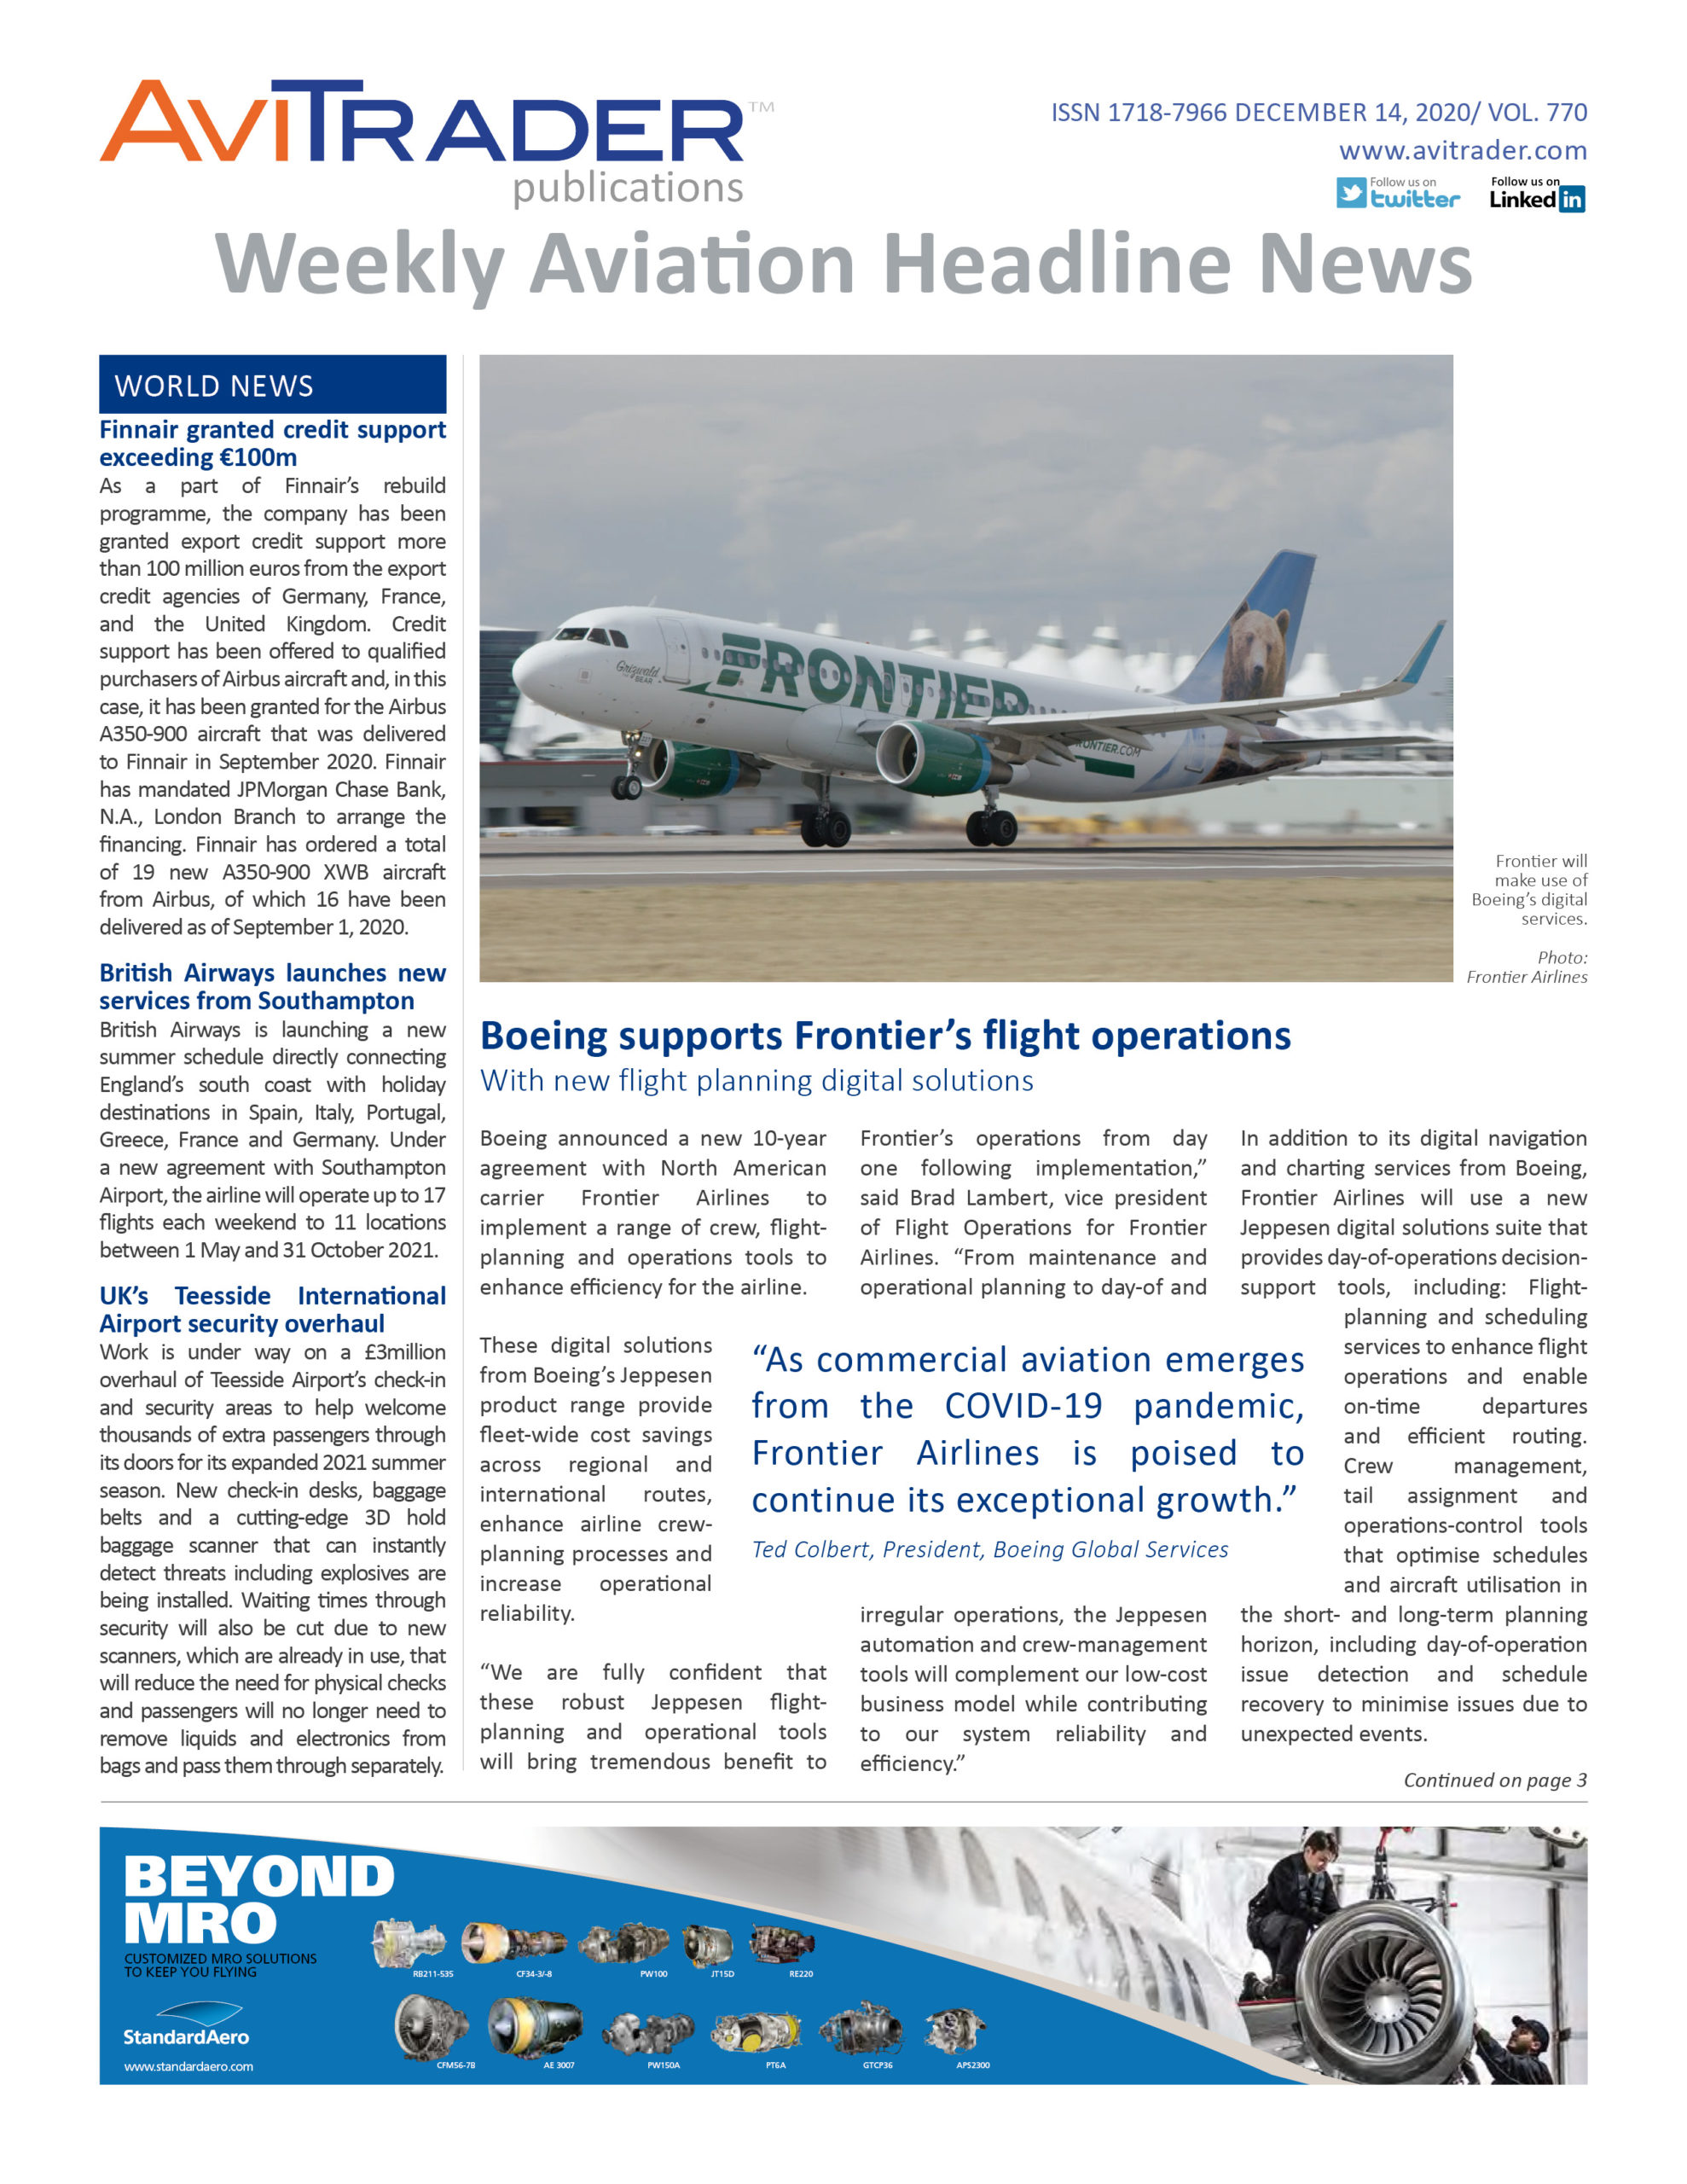 AviTrader_Weekly_Headline_News_Cover_2020-12-14